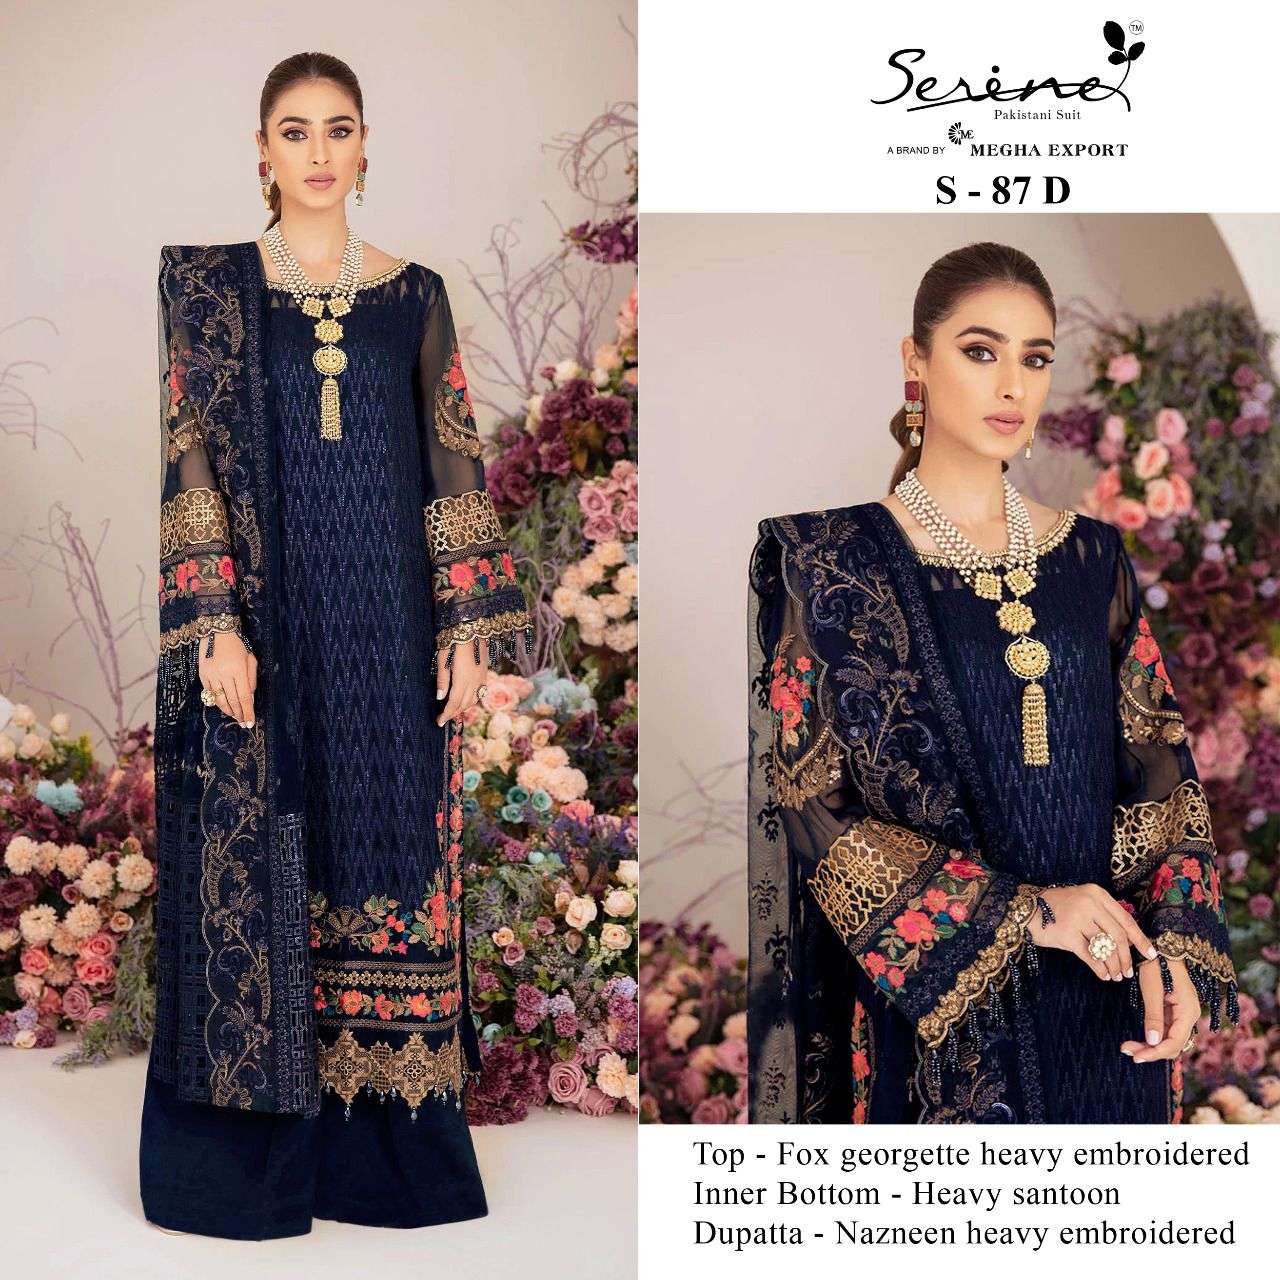 megha exports s 87 elegant look pakistani style dresses exporter